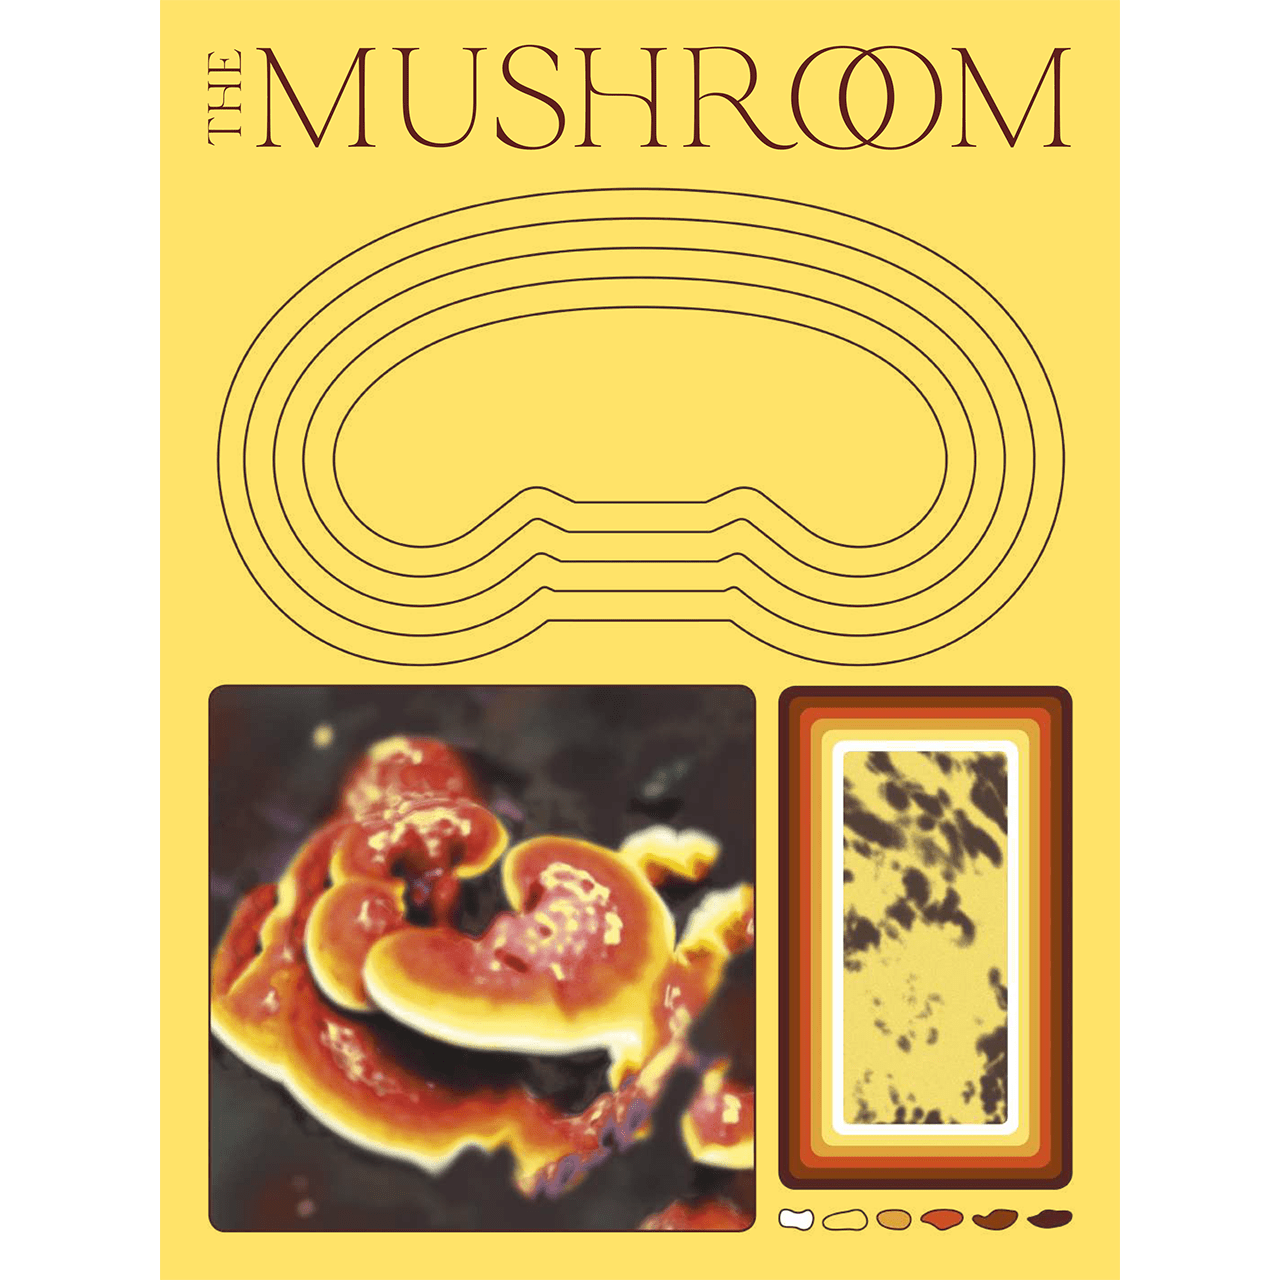 The Mushroom Magazine - Issue 1